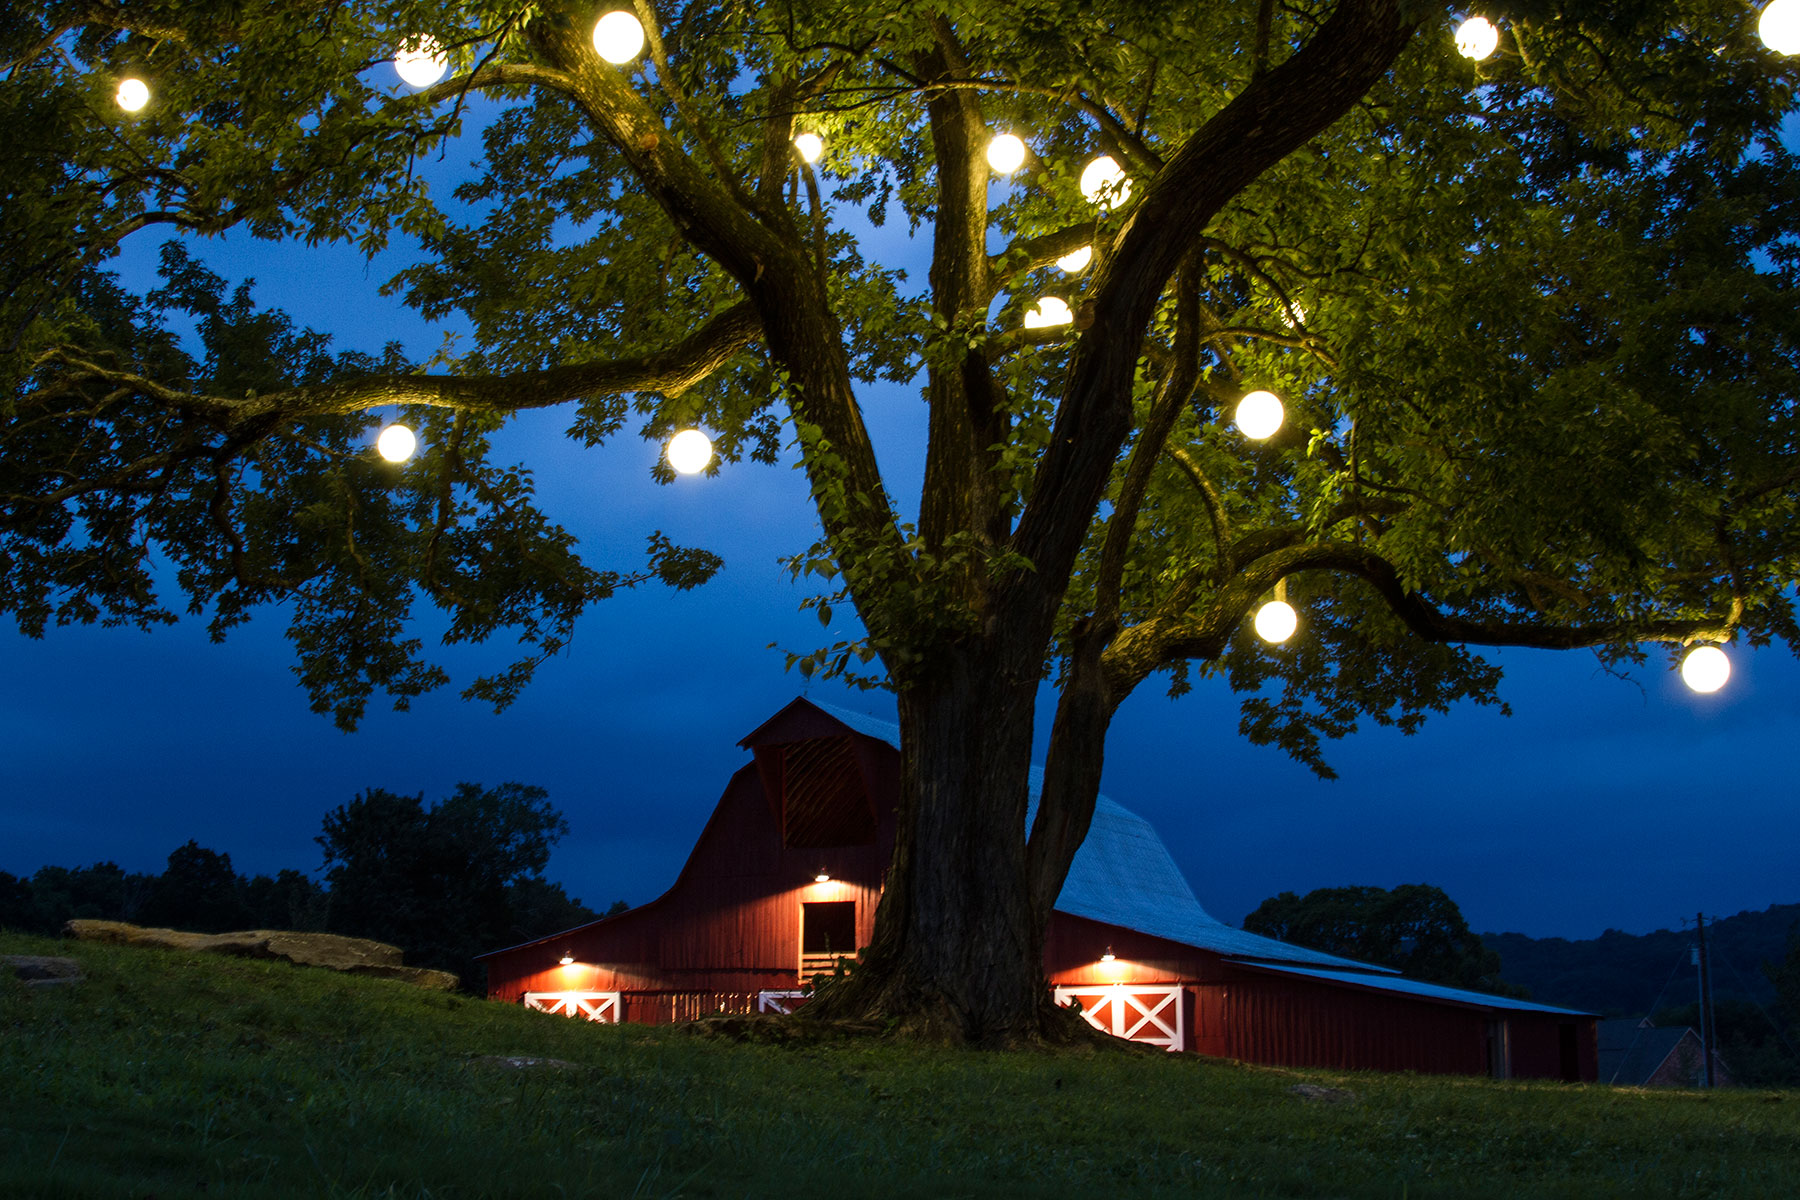 Tree and barnyard with lighting